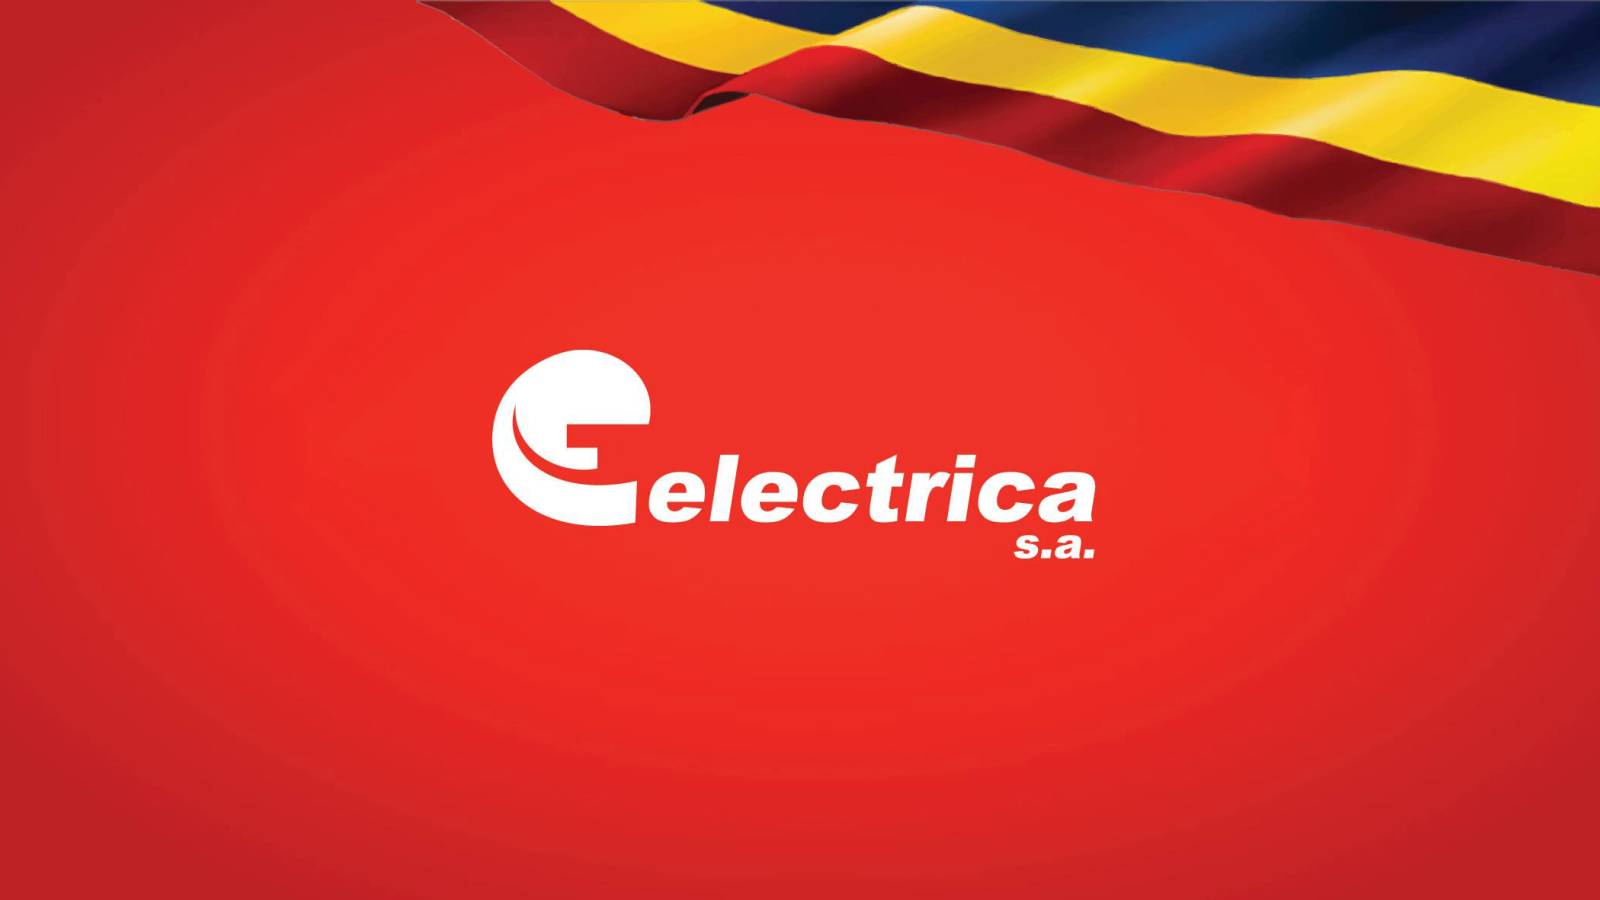 Notificarile ELECTRICA Oficiale ULTIM MOMENT Trebuie Stie Clientii Romania